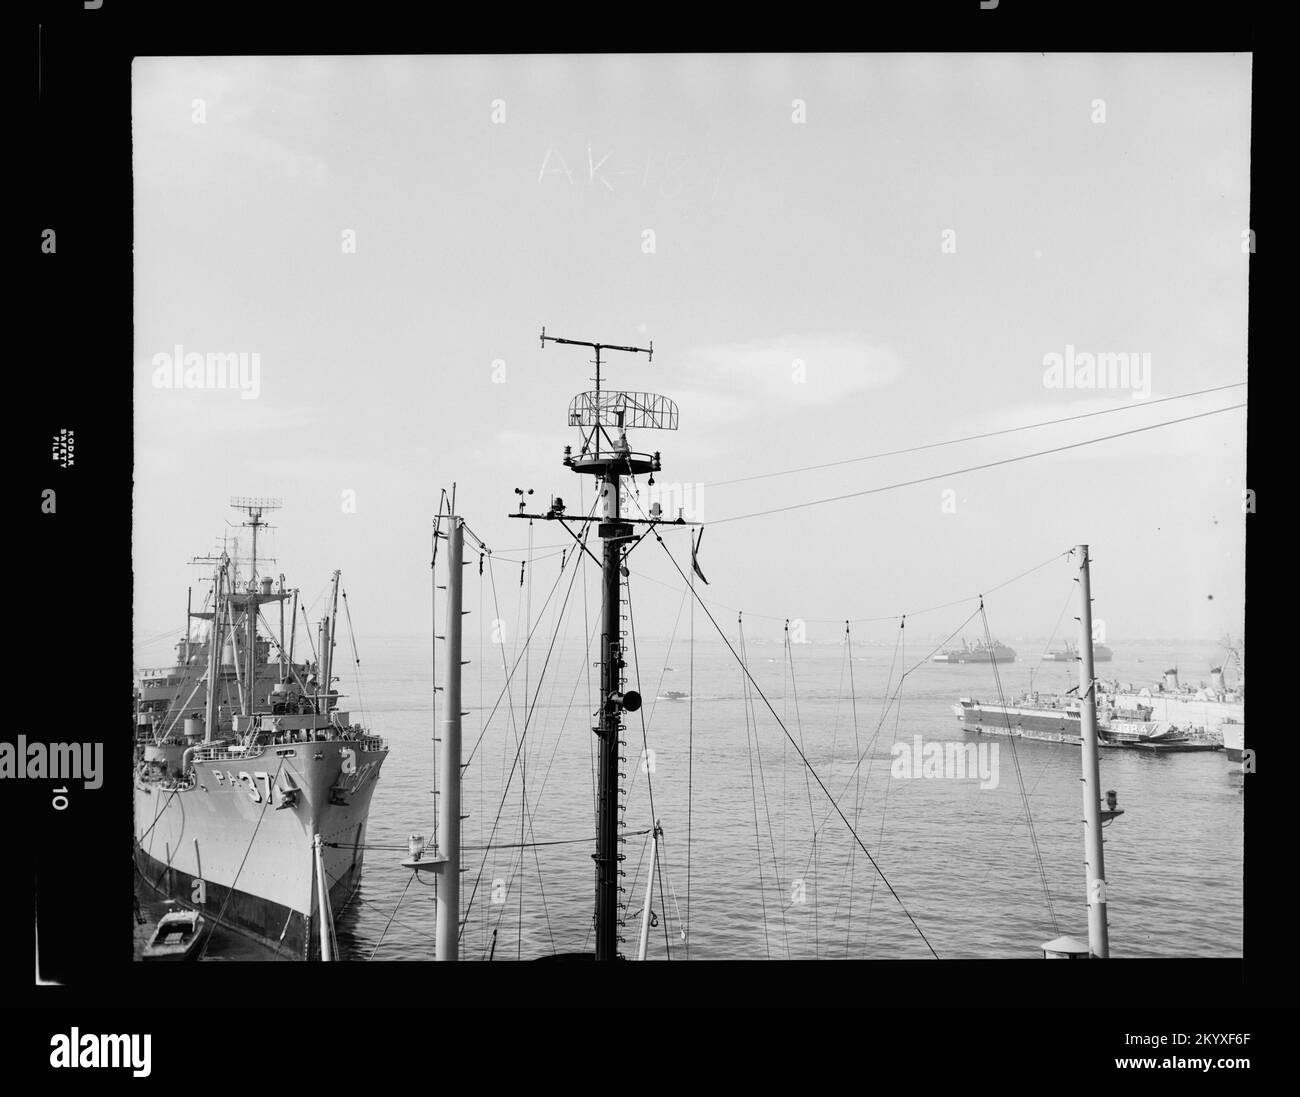 AK-184 Grainger , Ships, Naval Vessels, Boats, Naval History, Navy Stock Photo